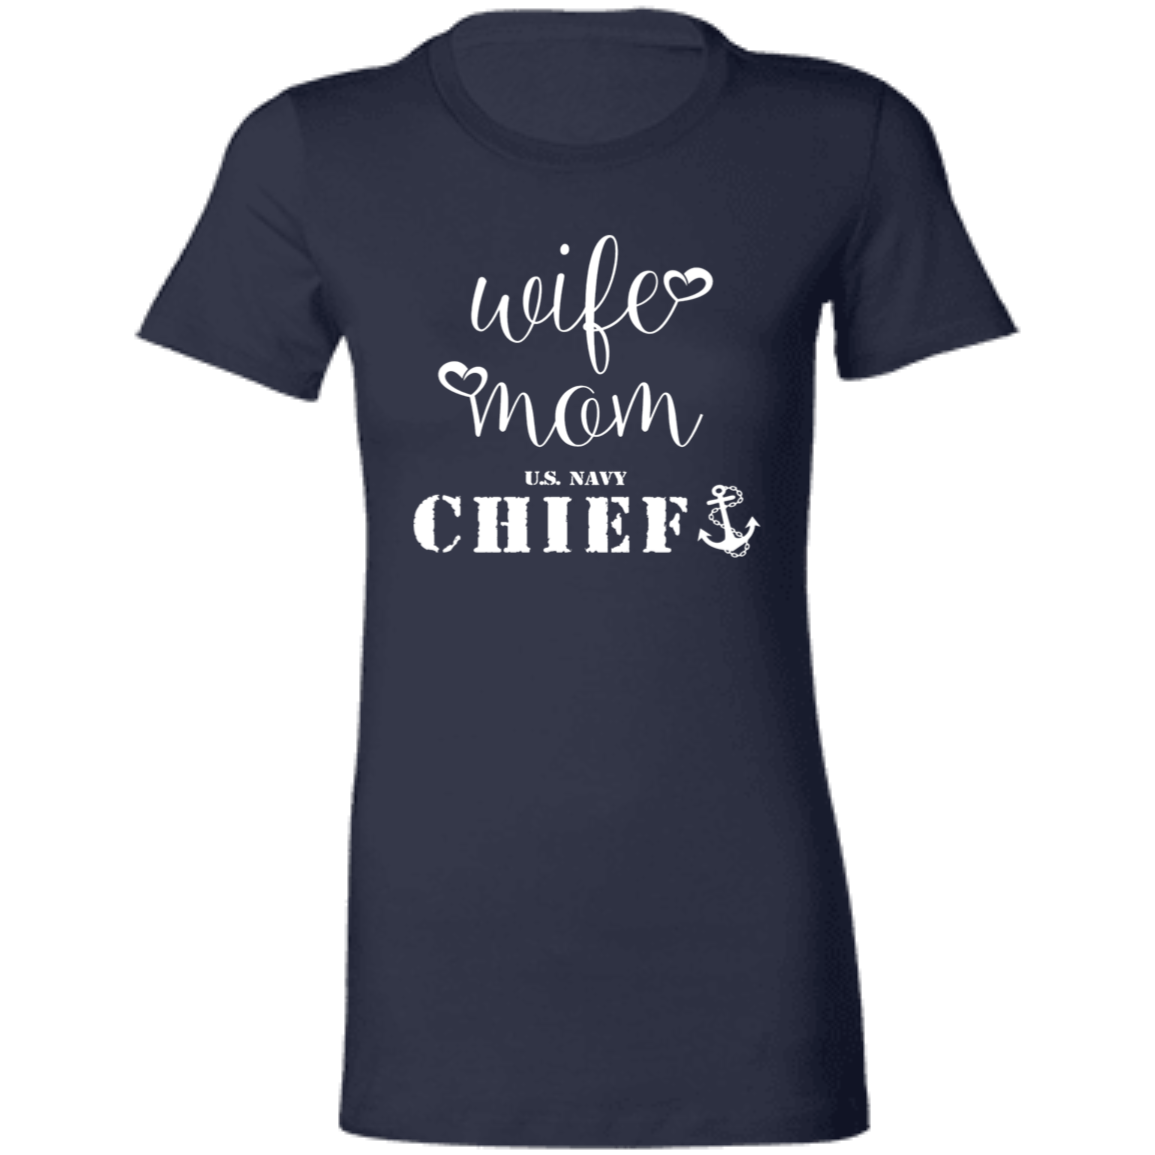 WMC White Ladies' Favorite T-Shirt